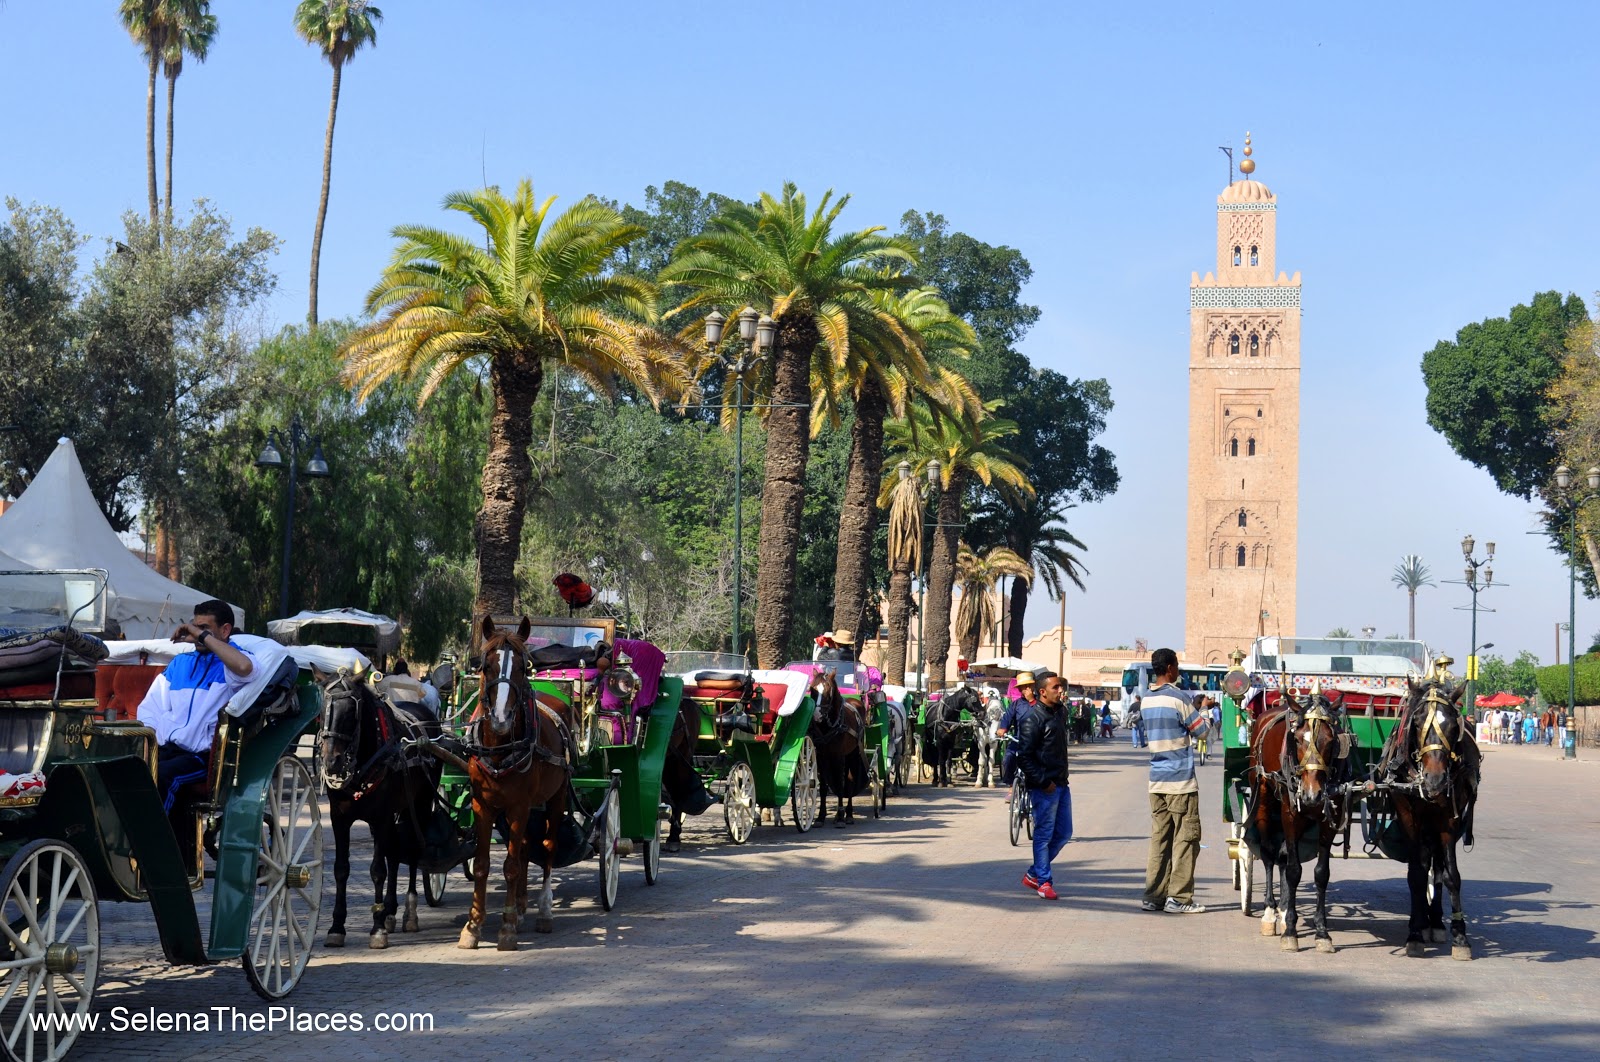 Jamaa el Fna - The Main Square of Marrakesh, Morocco